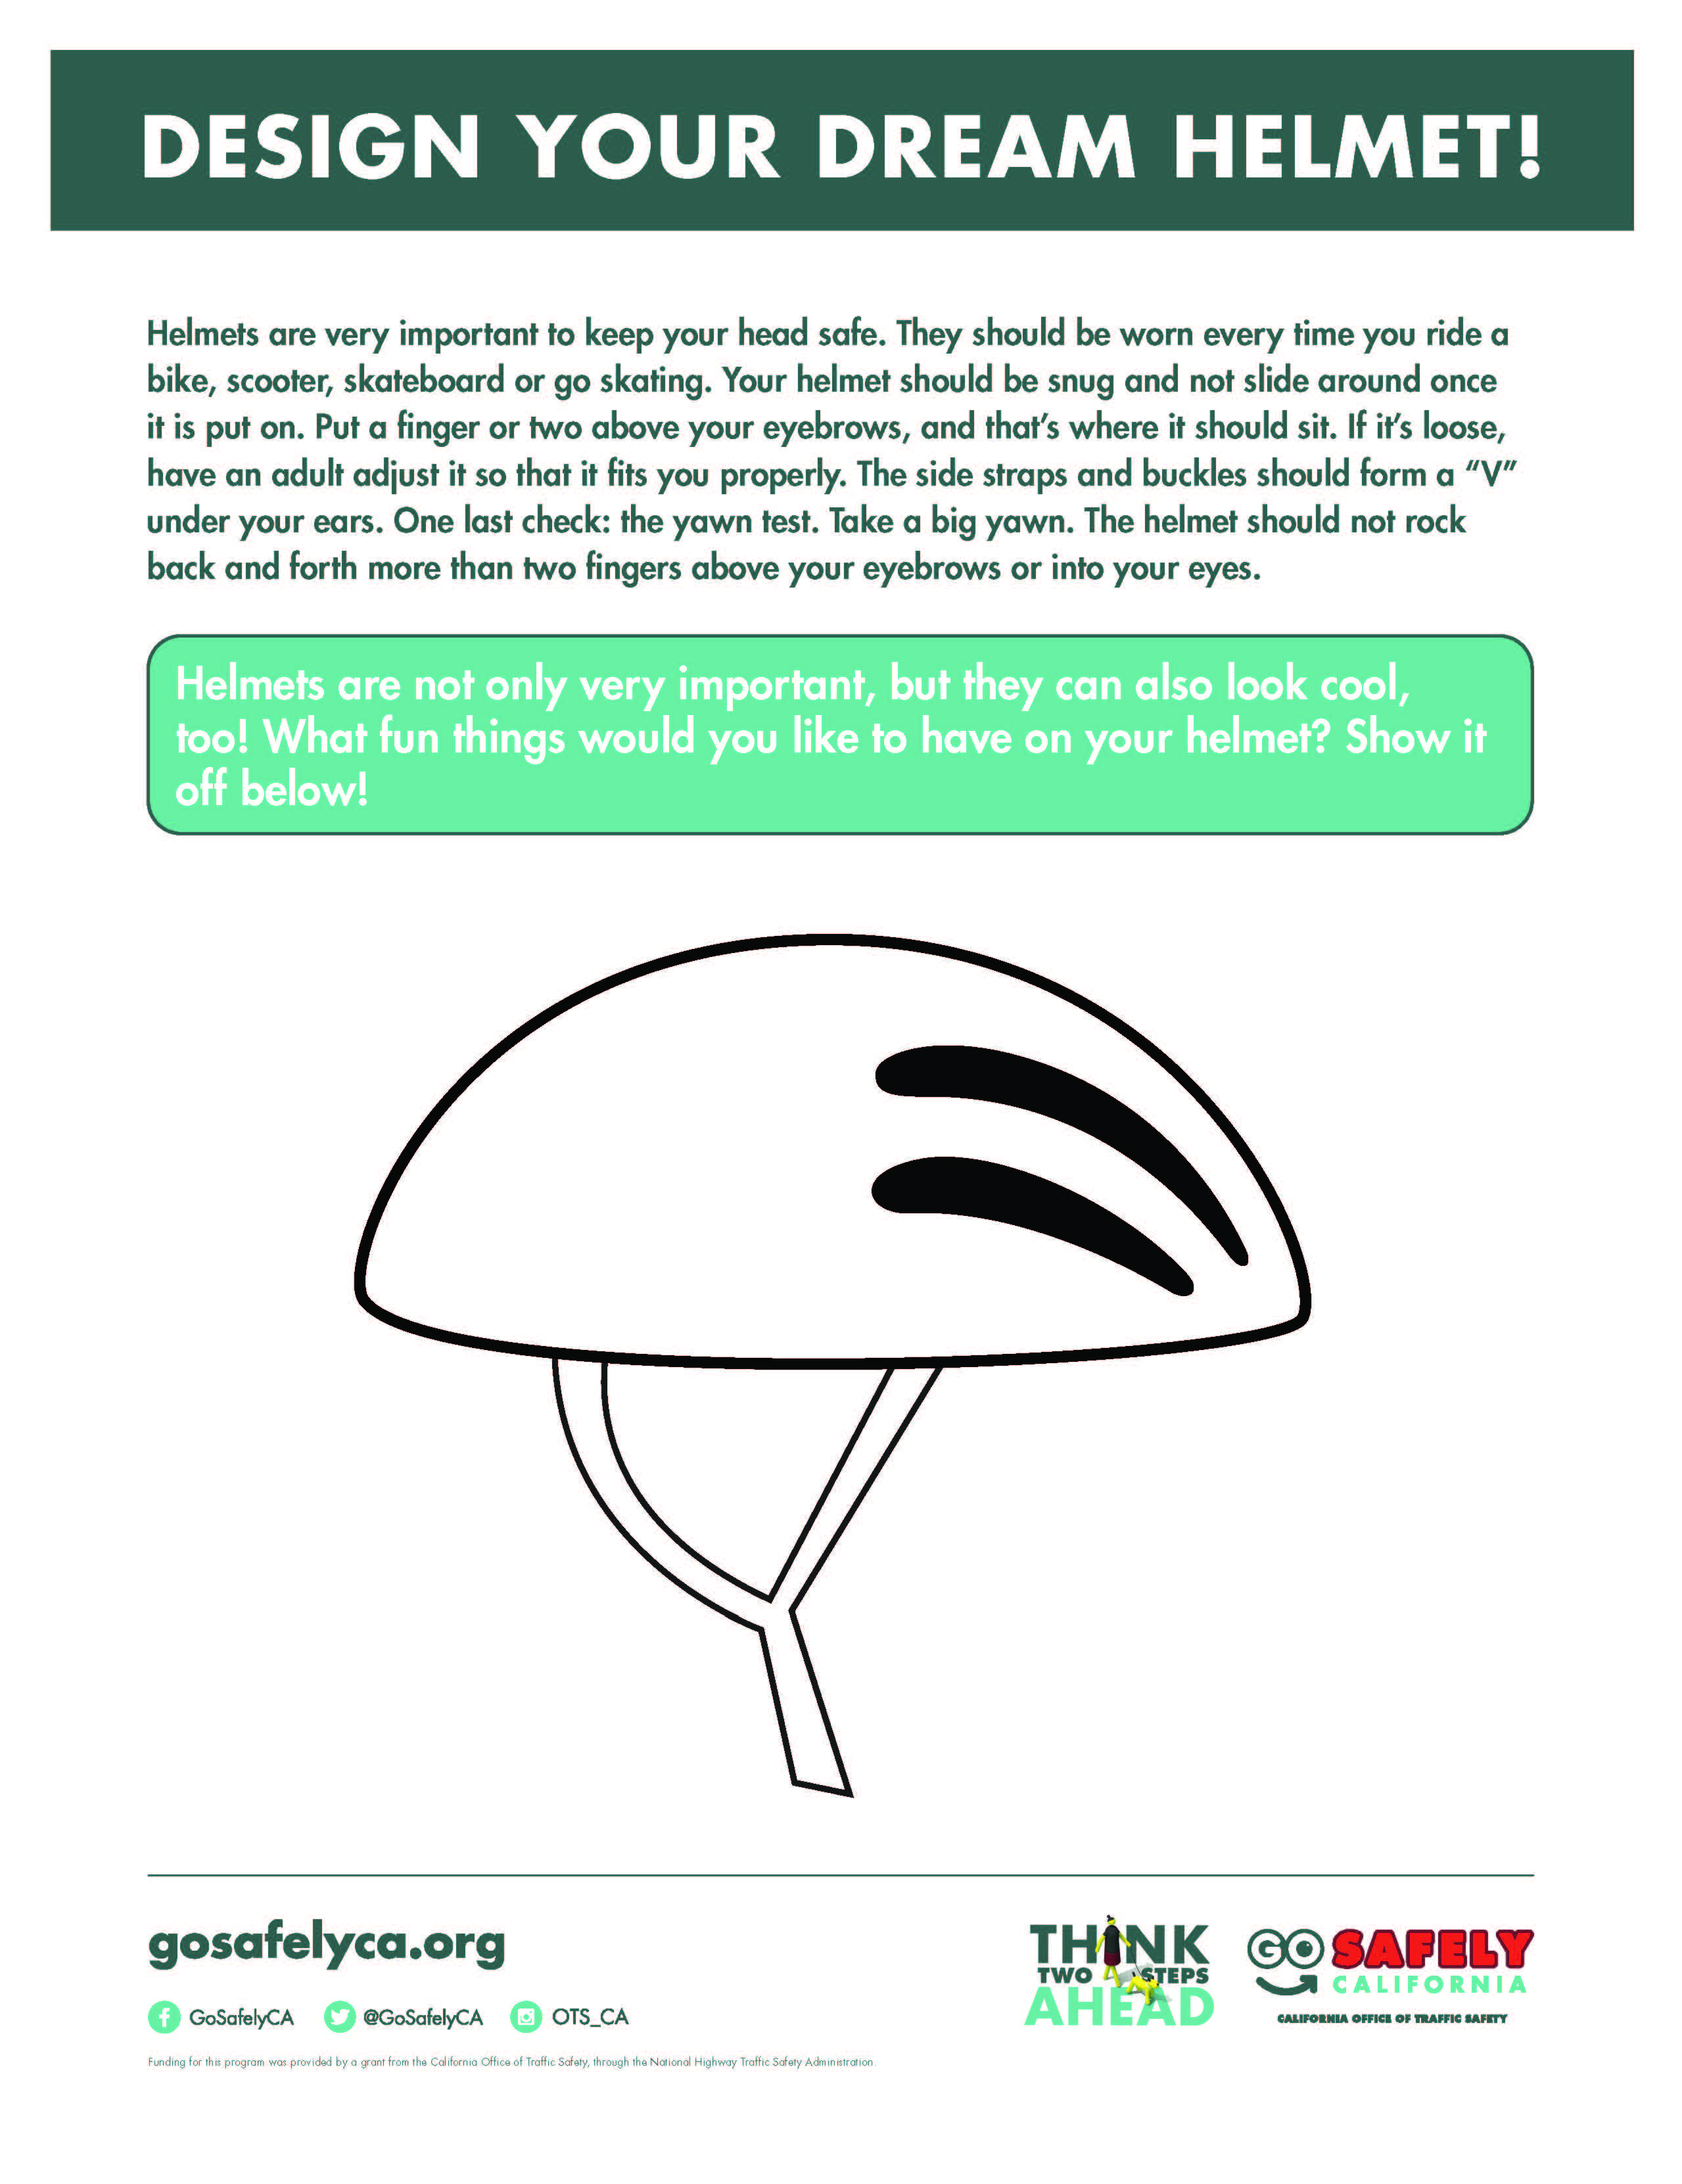 Image for: Design your own helmet